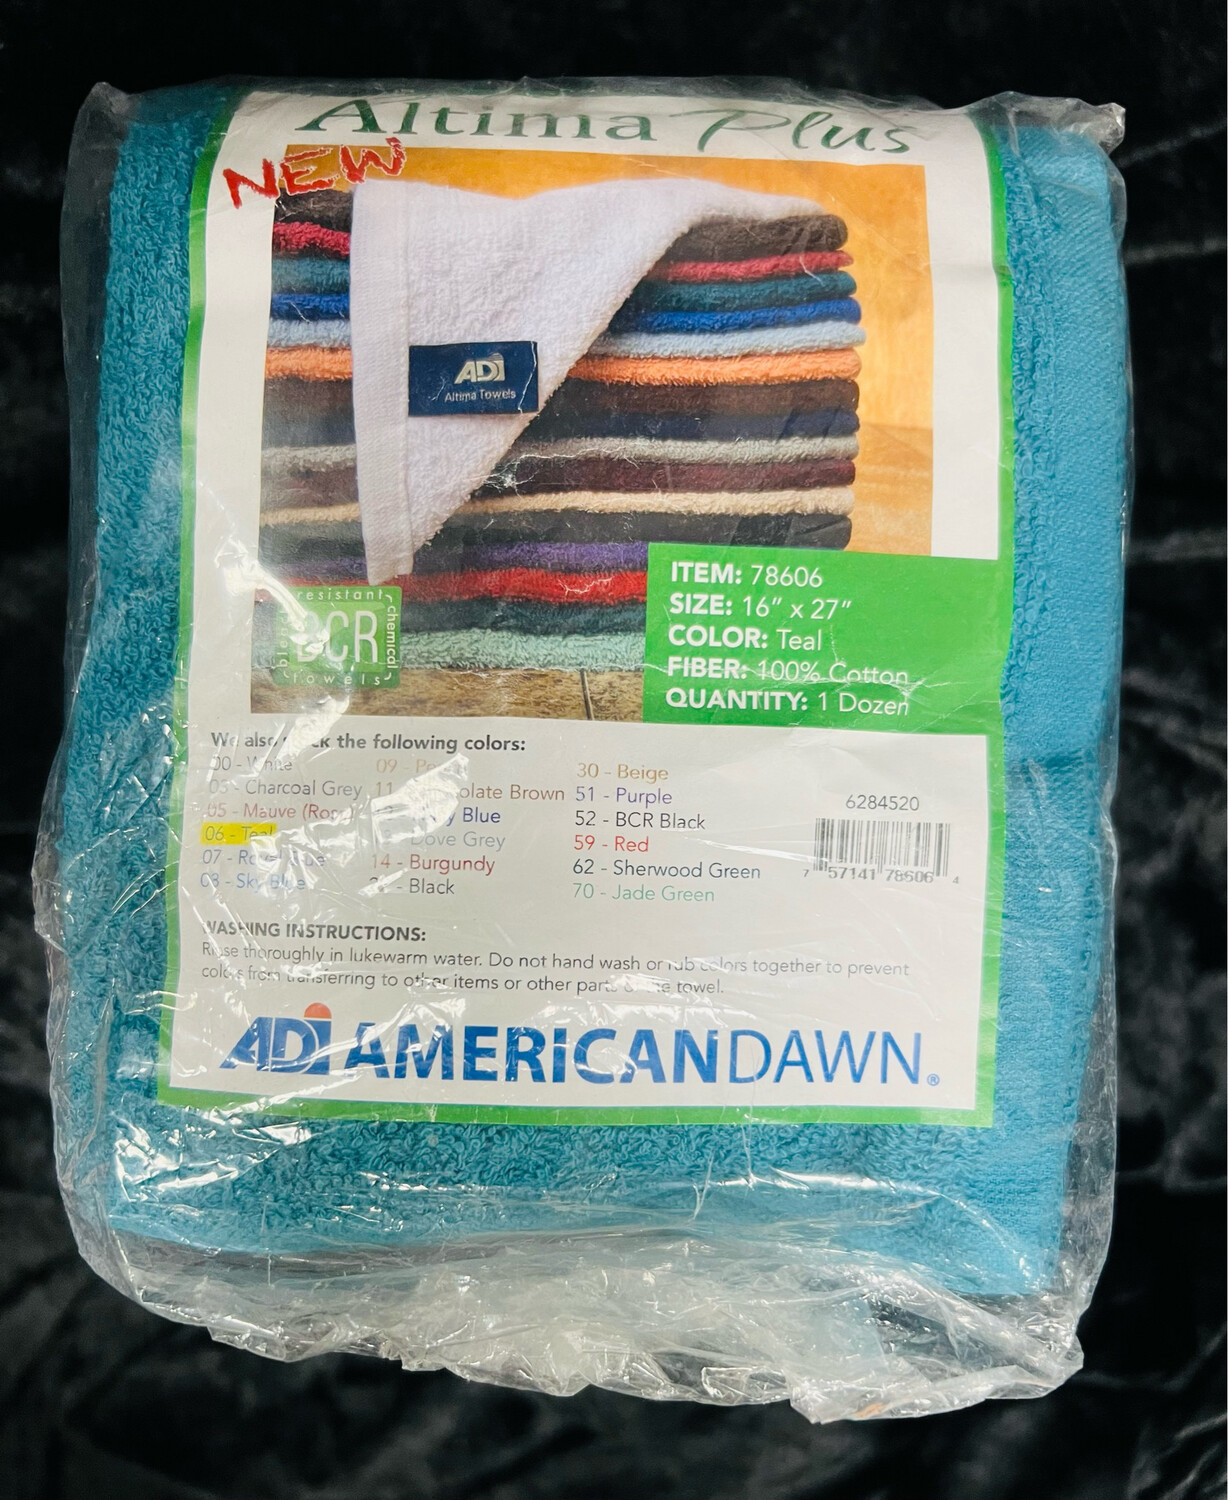 ADI Altima Plus Teal Towels 1dz